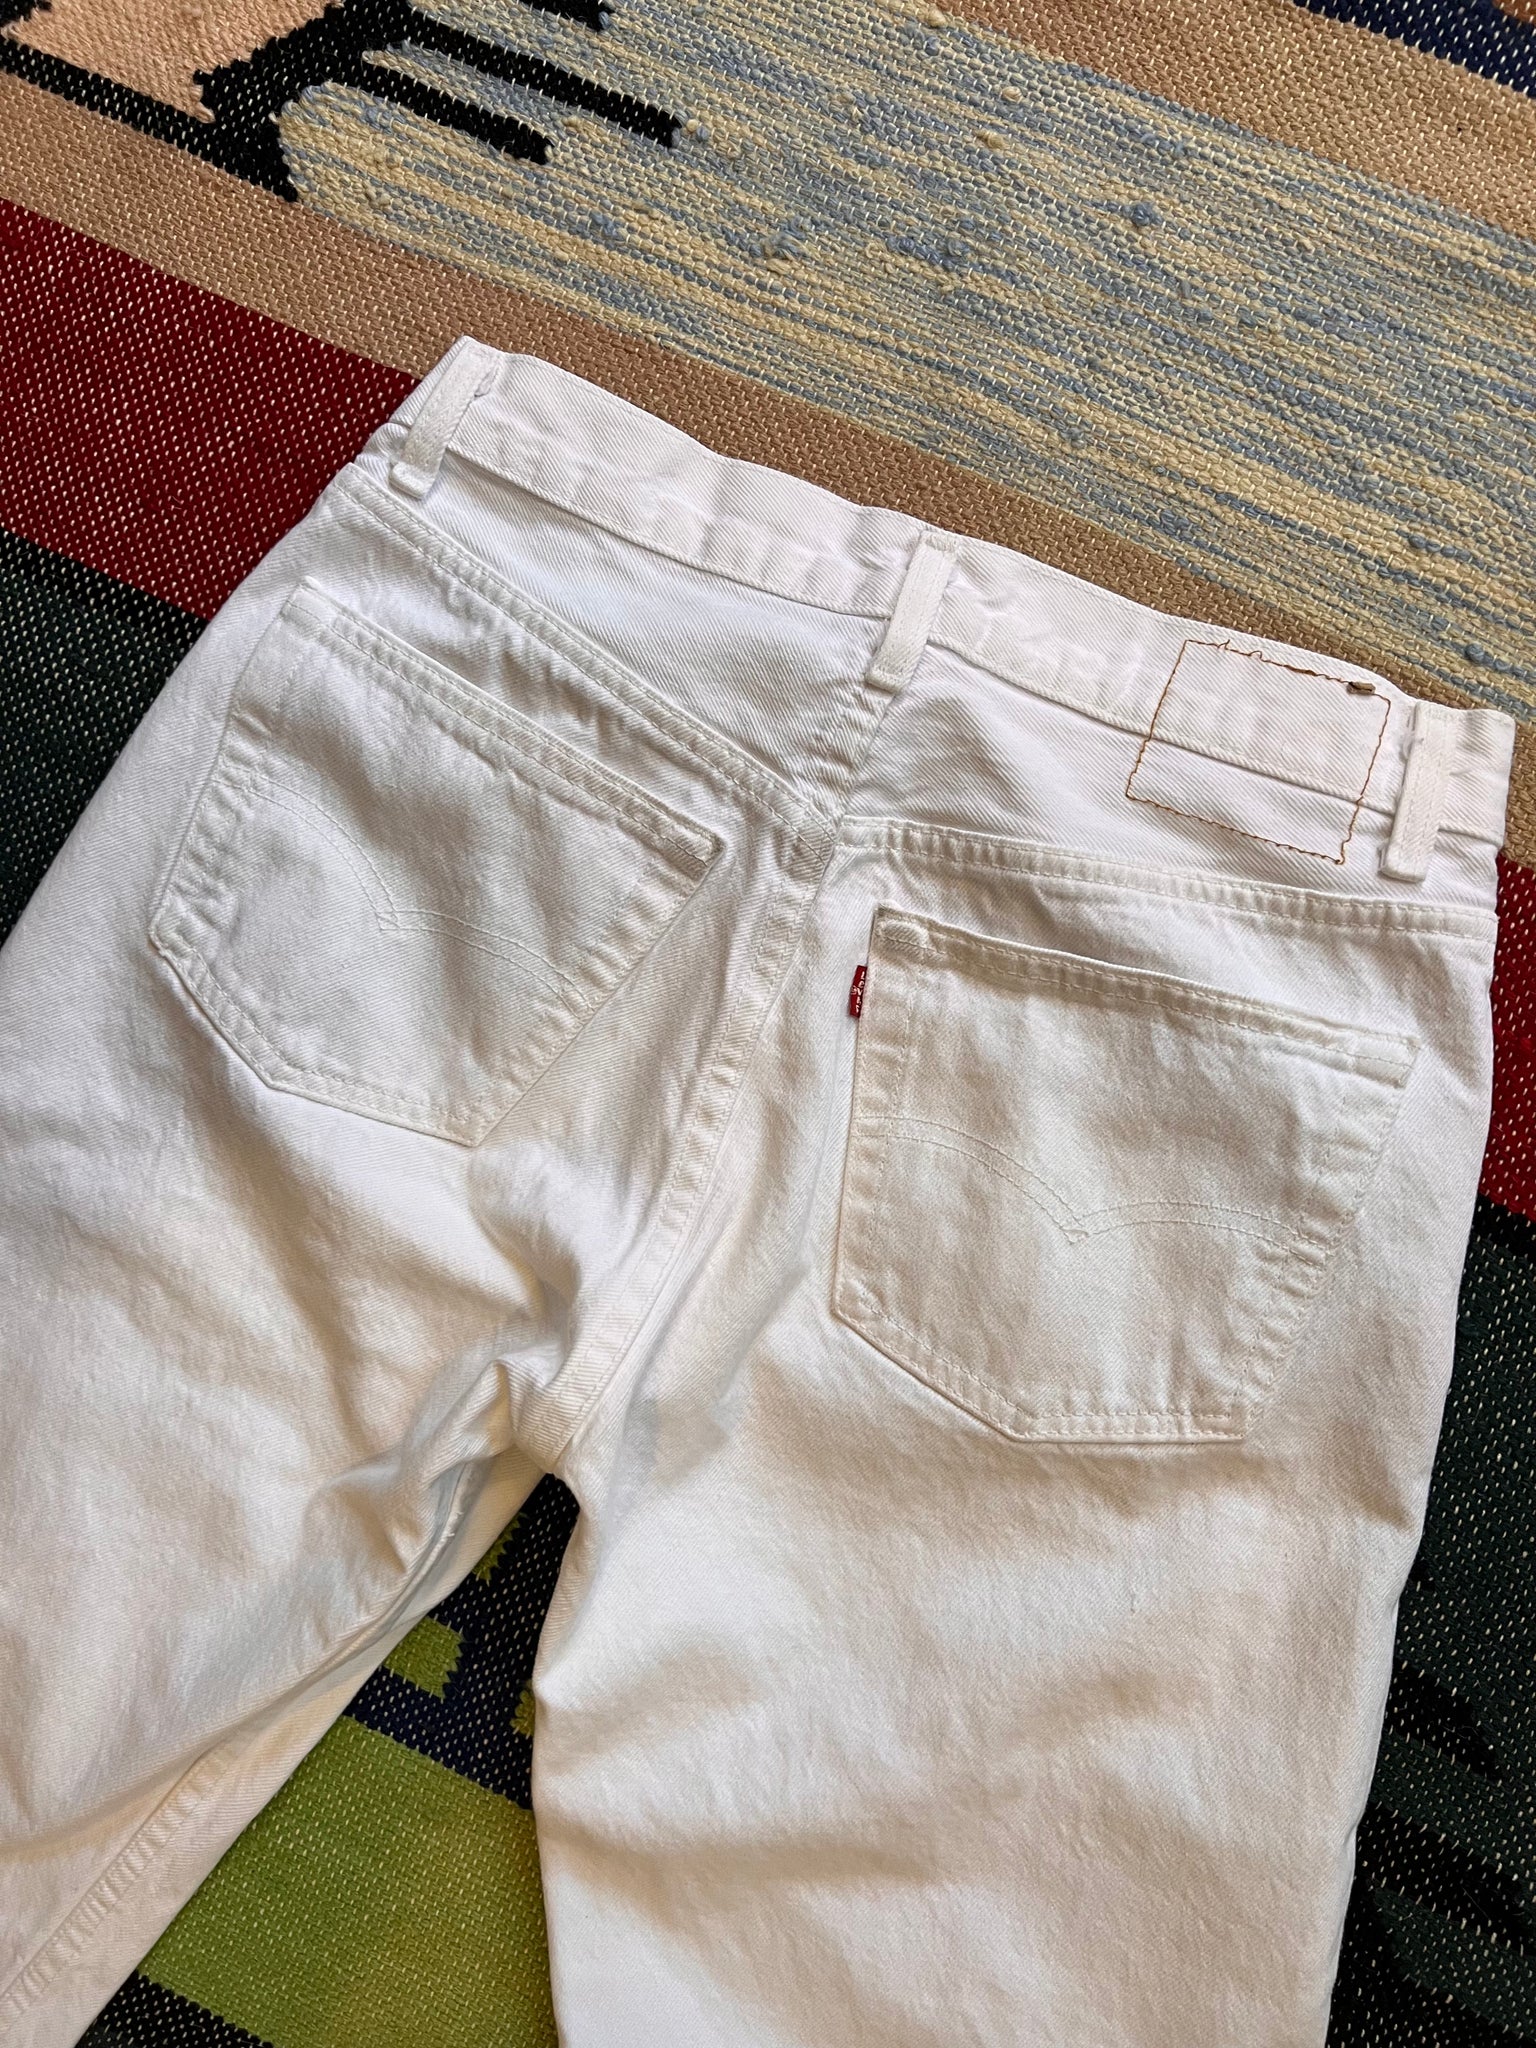 LEVI'S 501 Vintage White Button Fly Jeans 29” x 35”